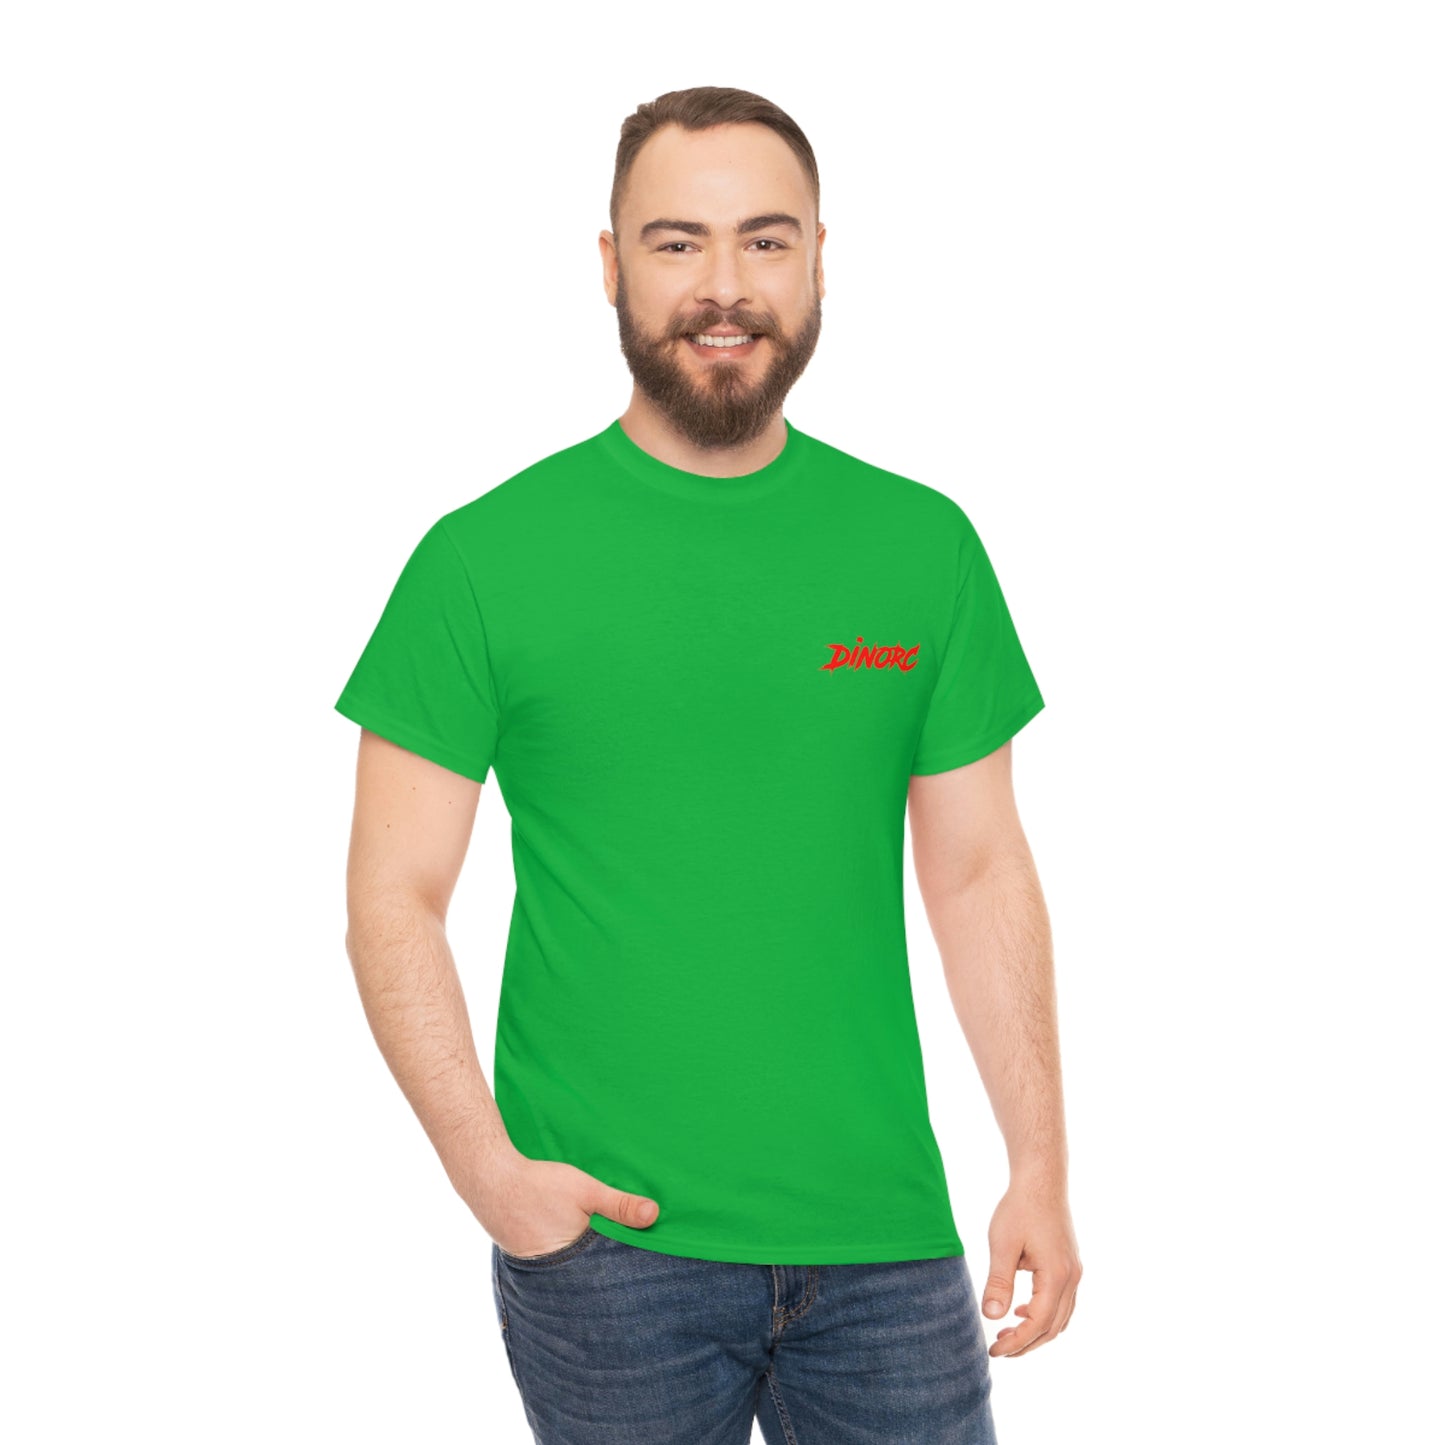 Front Back DinoRc Logo T-Shirt S-5x Black Green